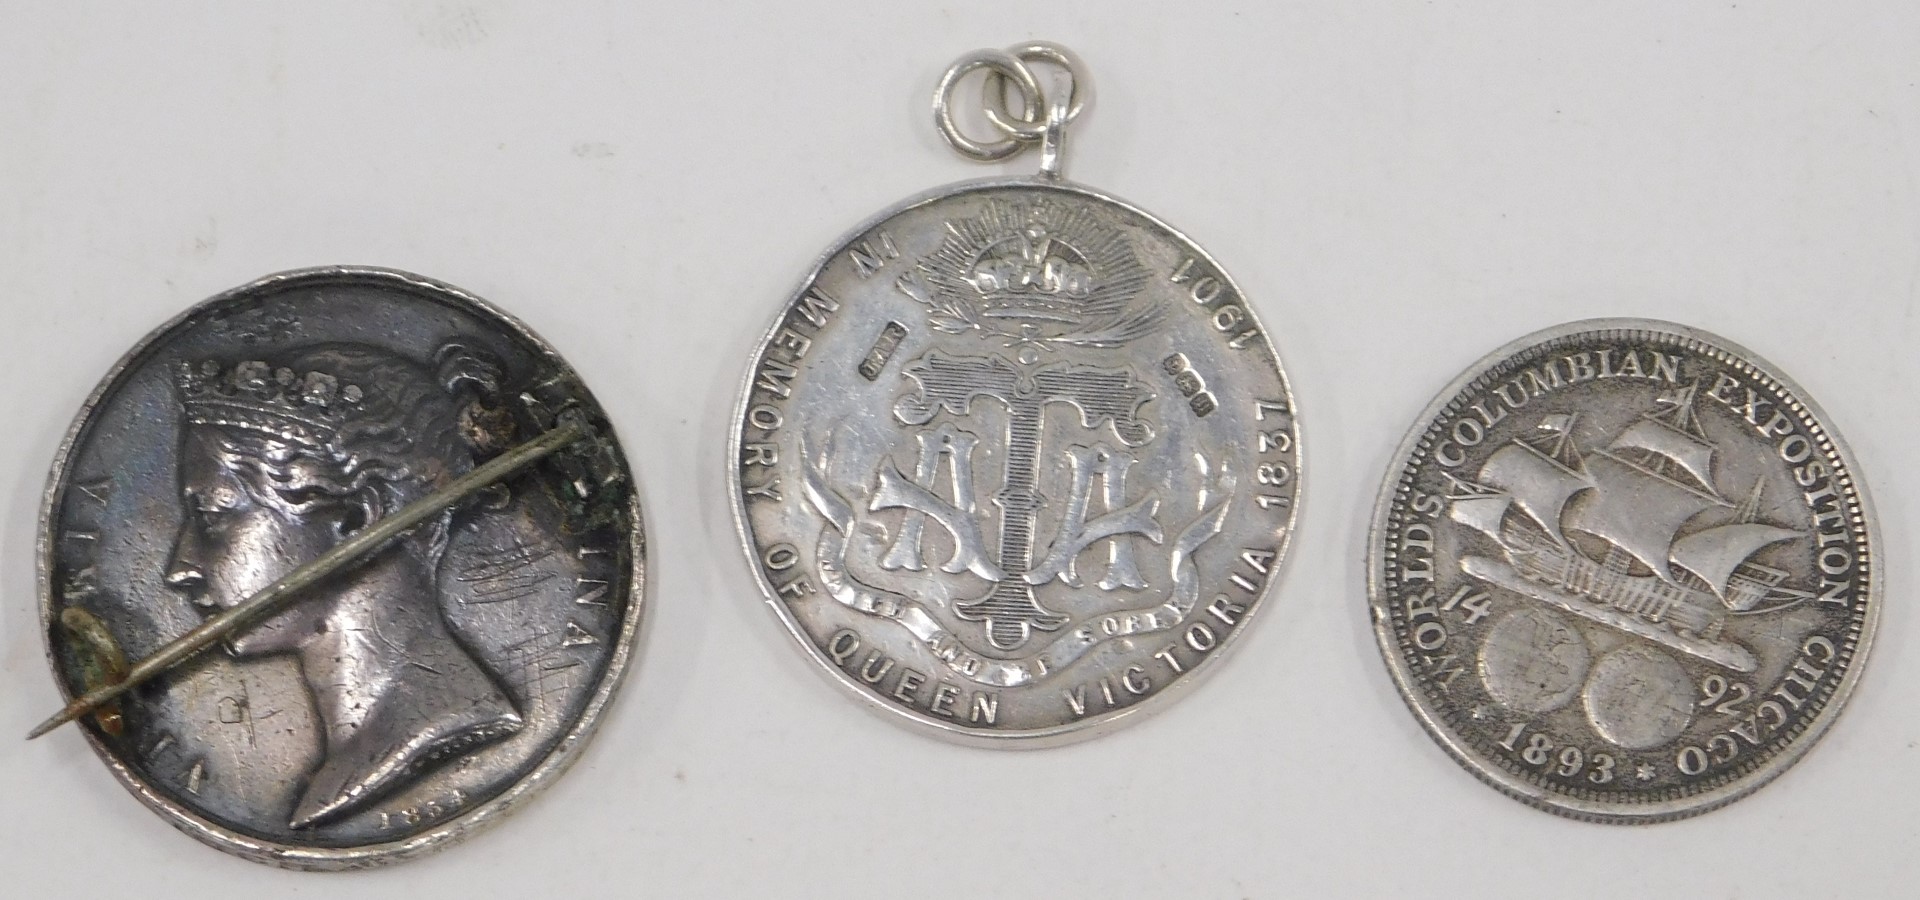 A silver commemorative Victoria medal, dated 1901, a Victoria silver crown dated 1874 converted to a - Image 2 of 2